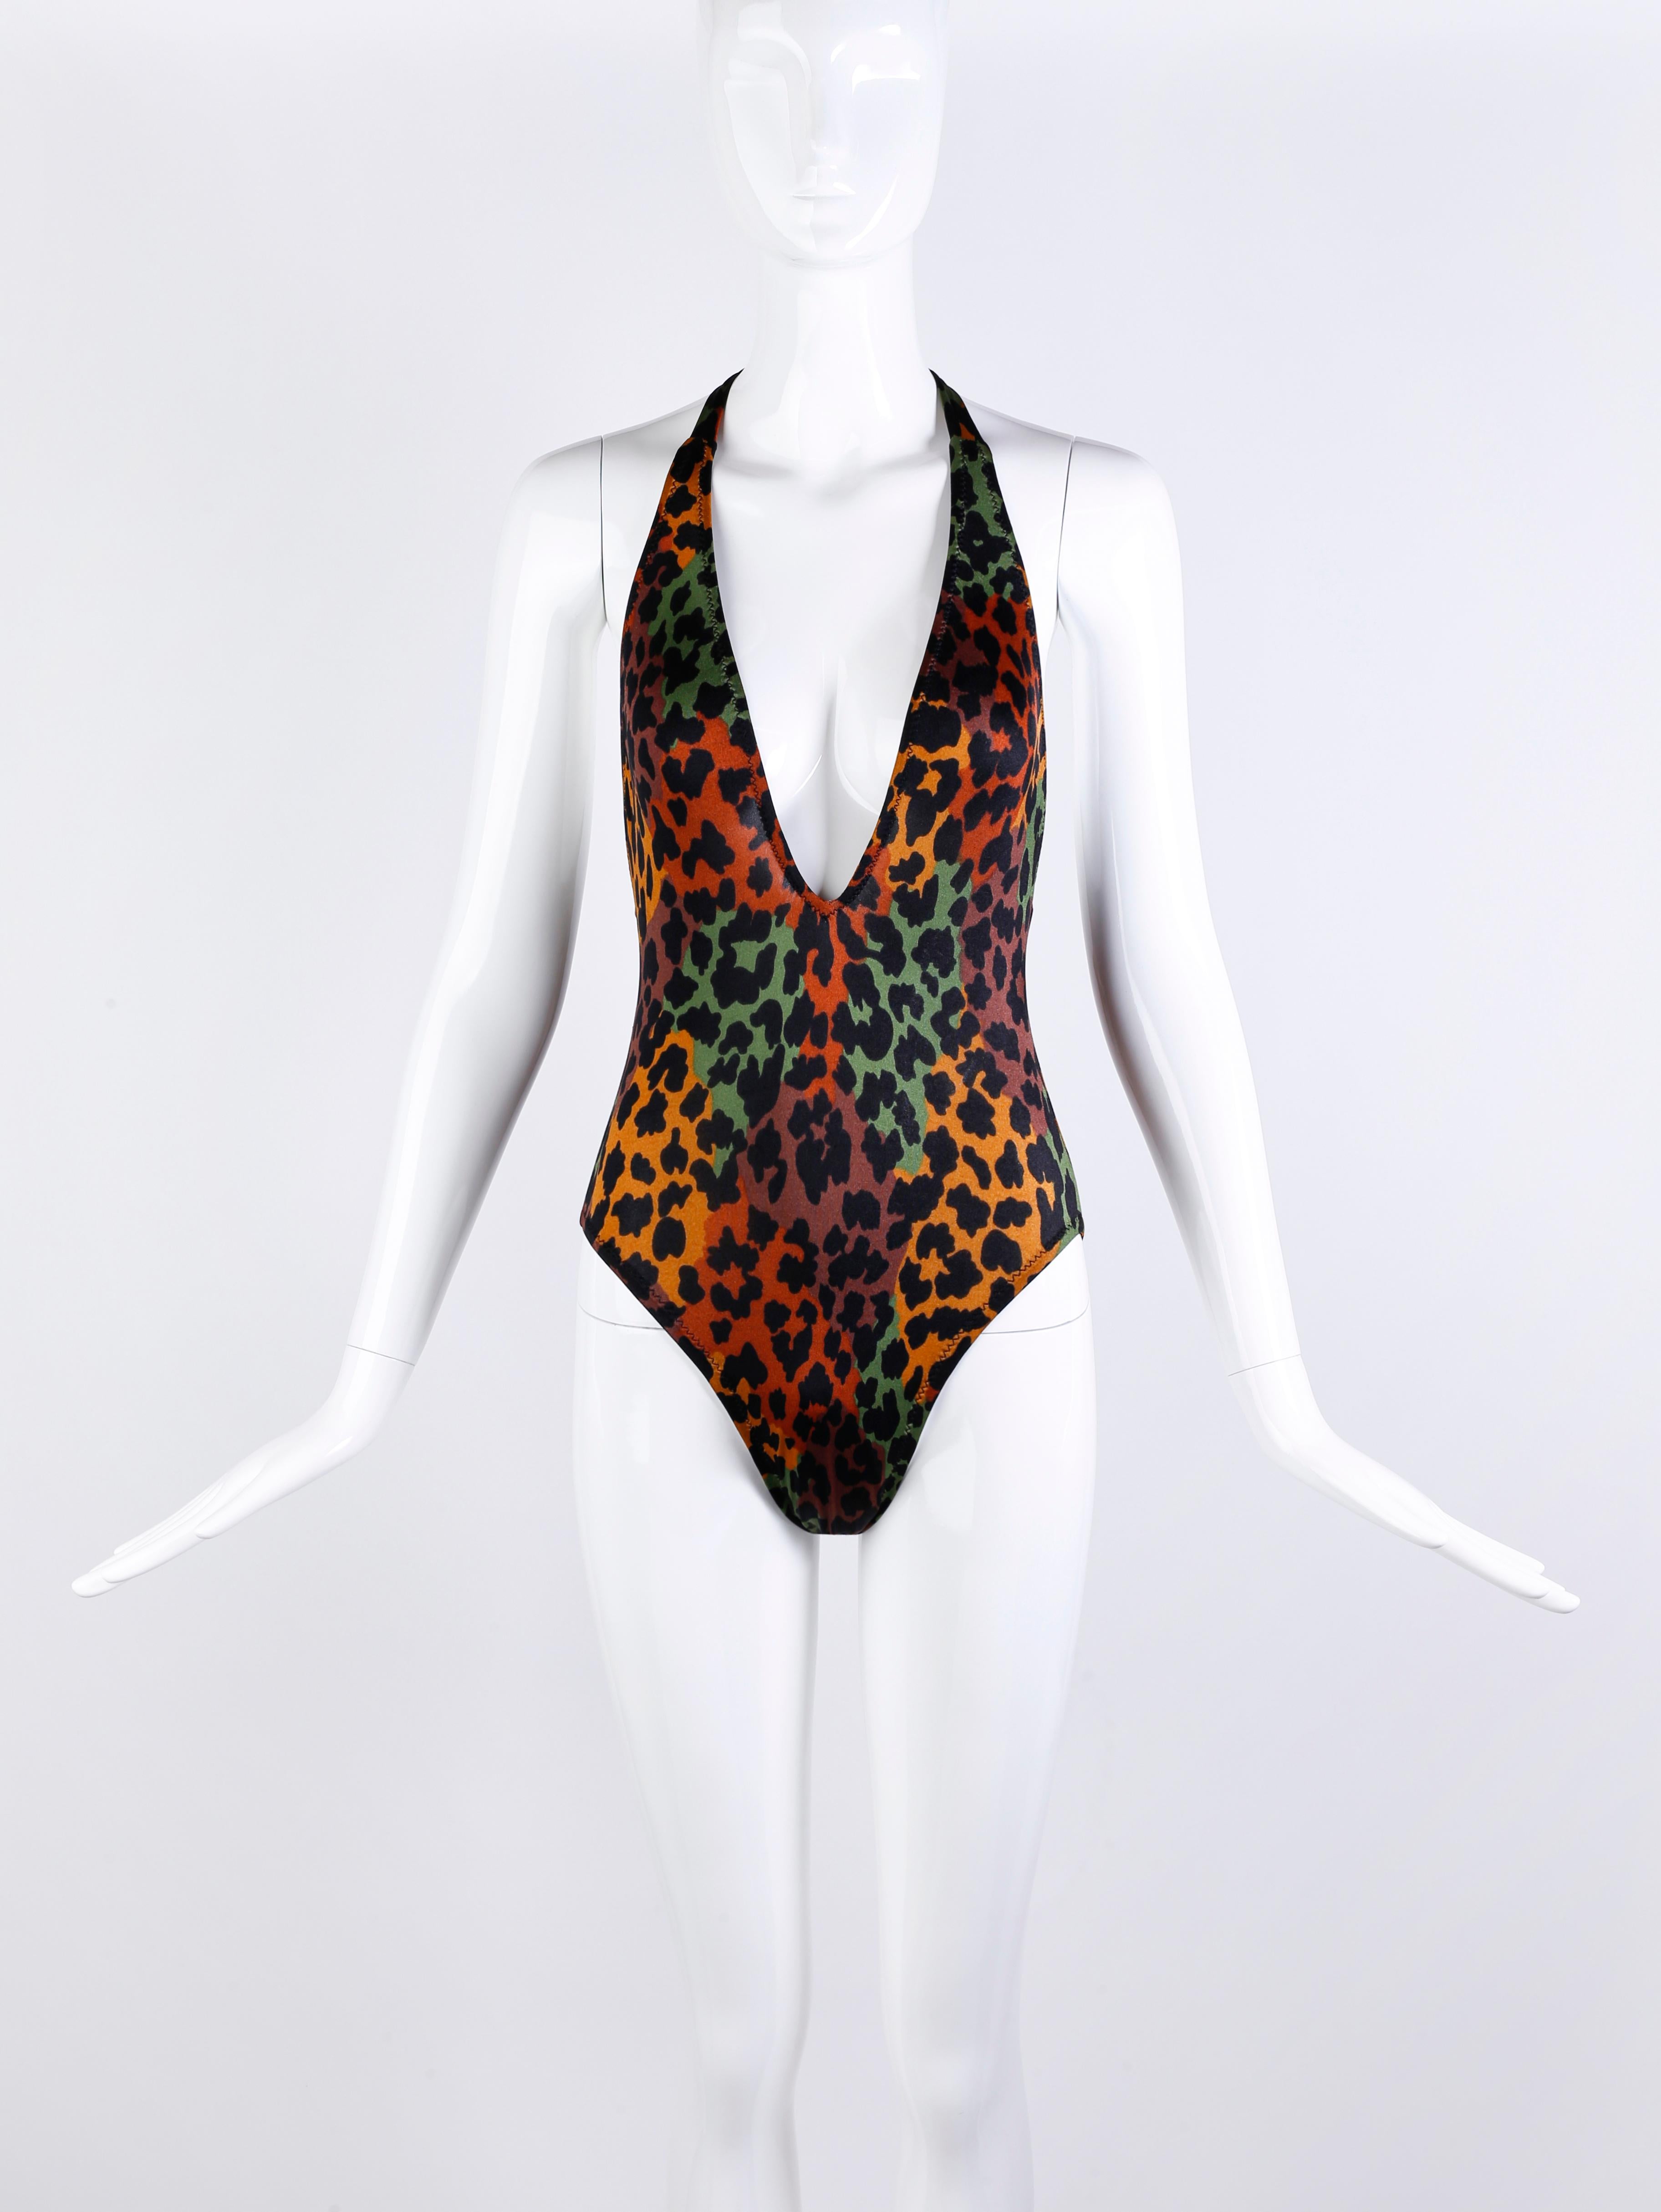 yves saint laurent bikini leopard